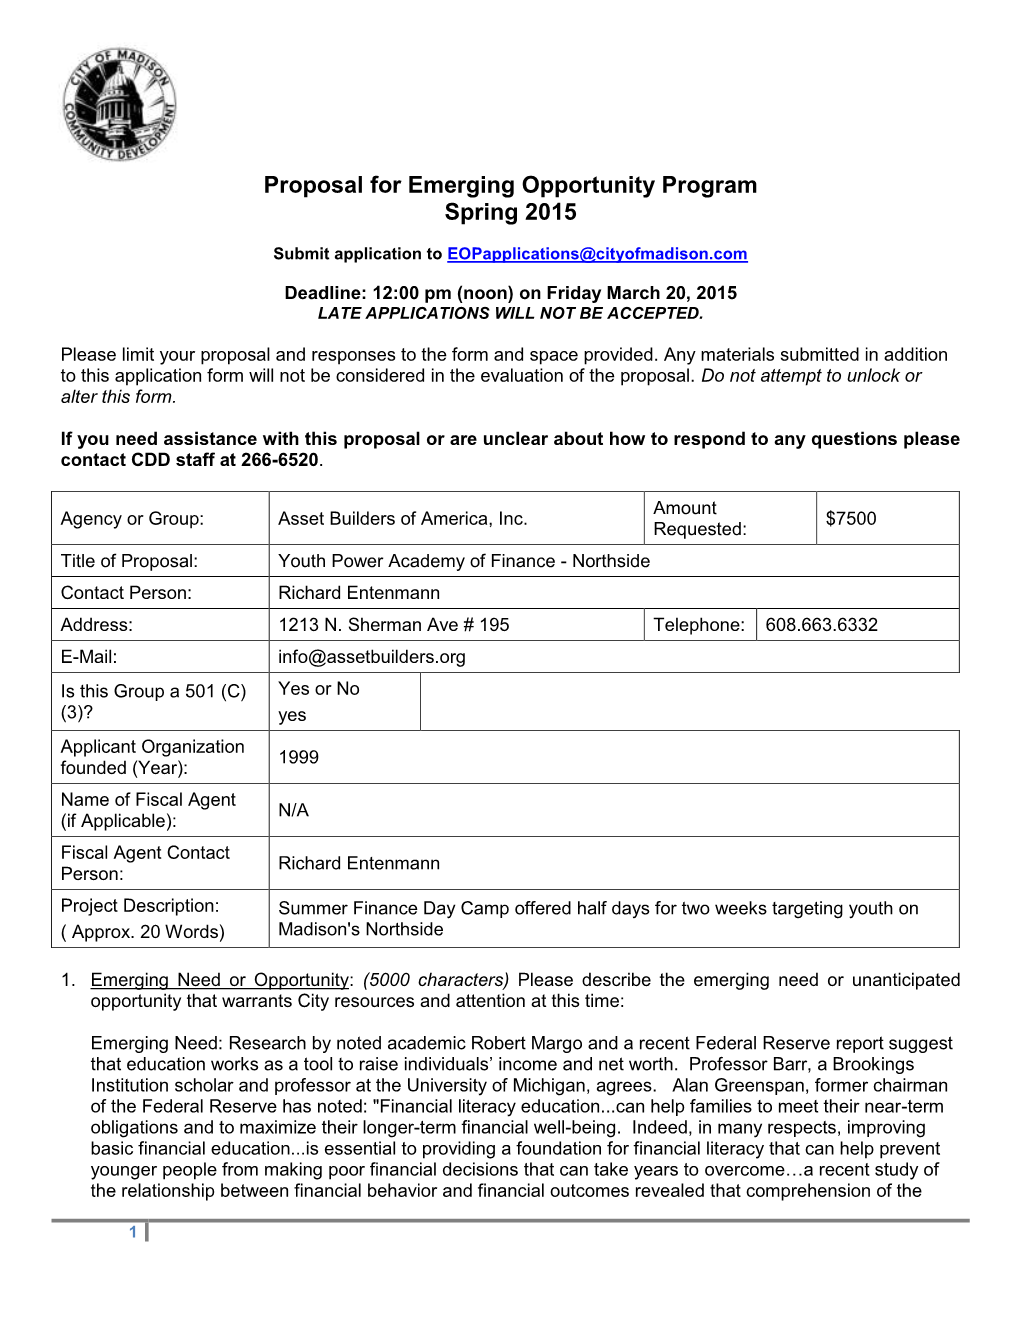 Proposal for Emerging Opportunity Program Spring 2015